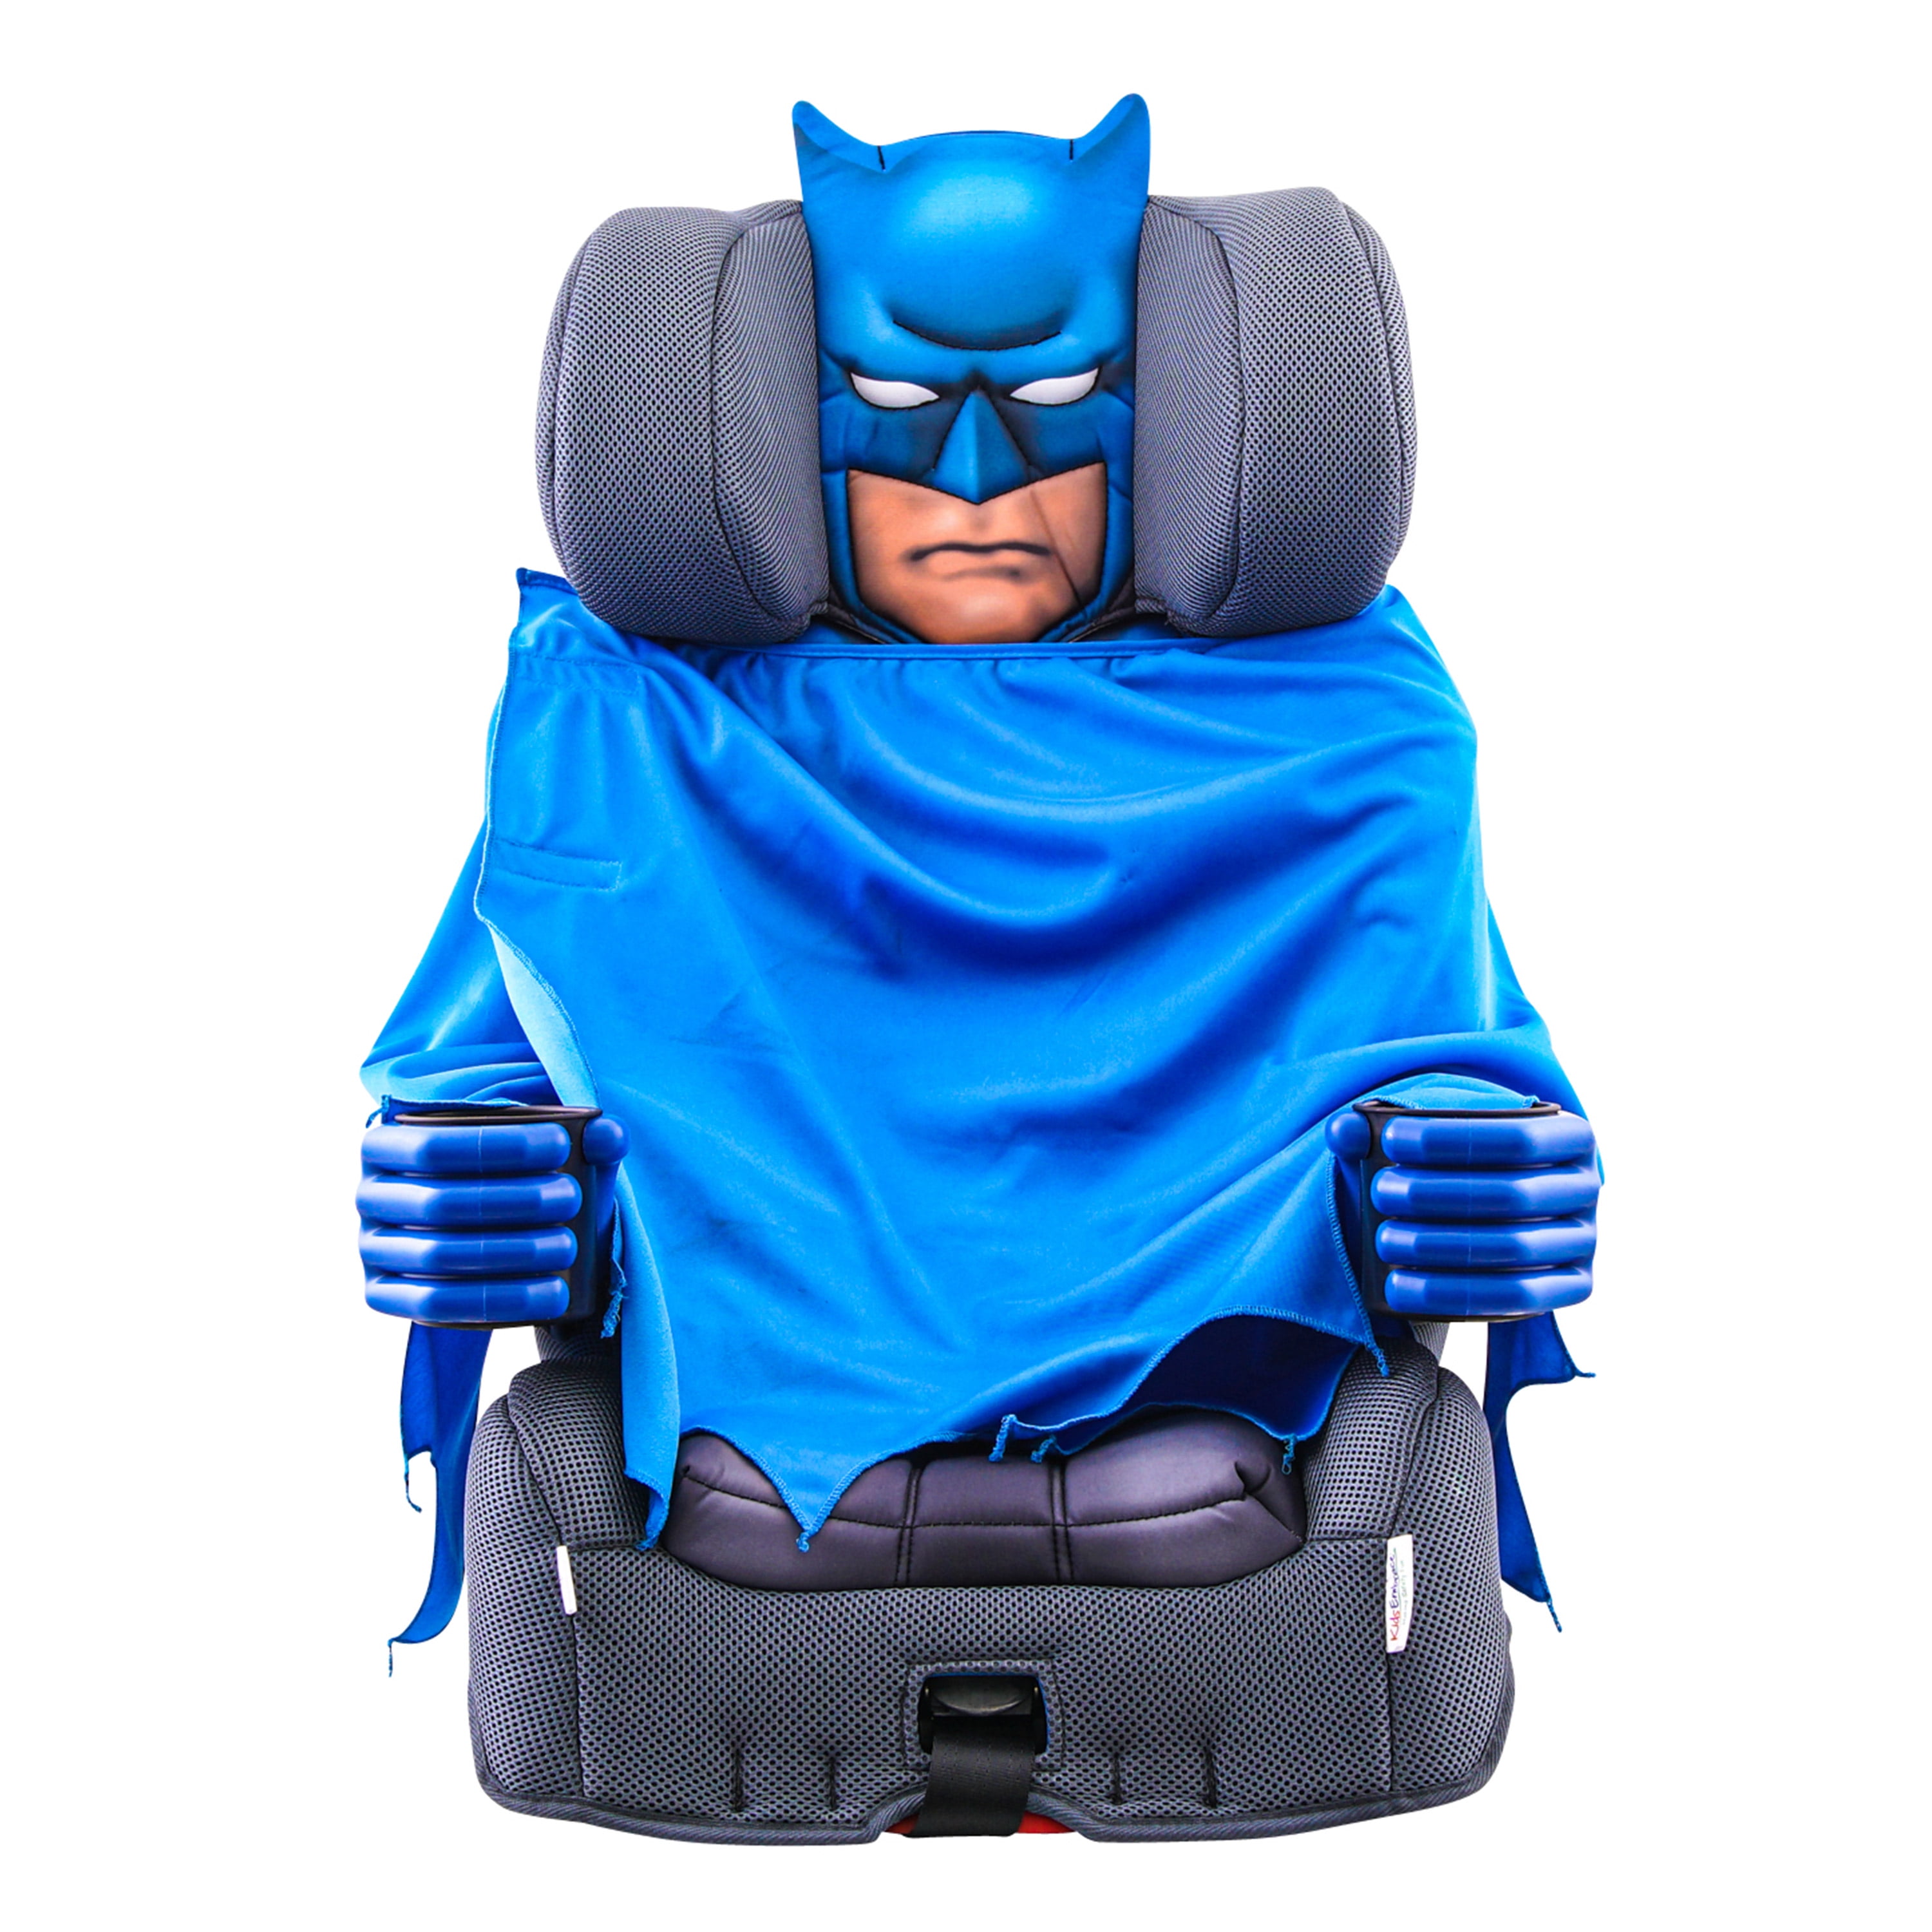 KidsEmbrace Combination Harness Booster Car Seat, DC Comics Batman -  